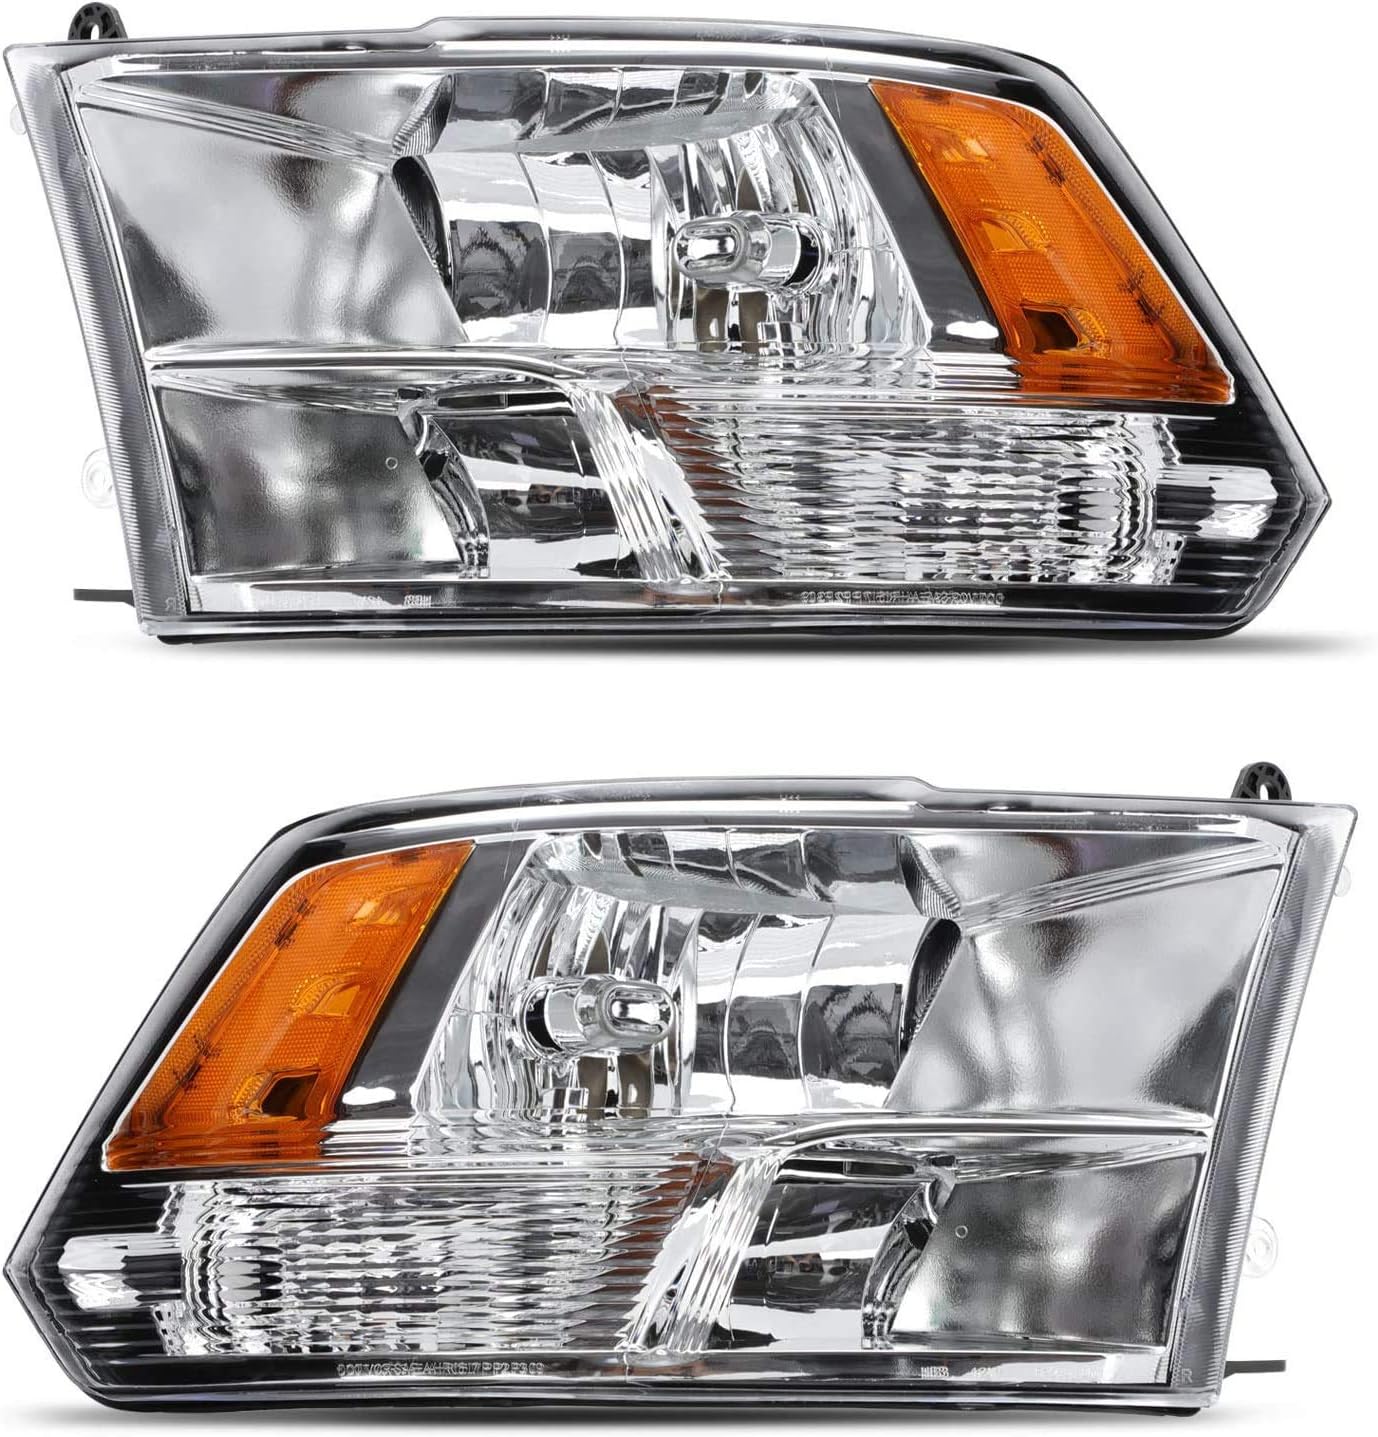 TopAutoGear Headlights for 2009-2018 Dodge Ram 1500